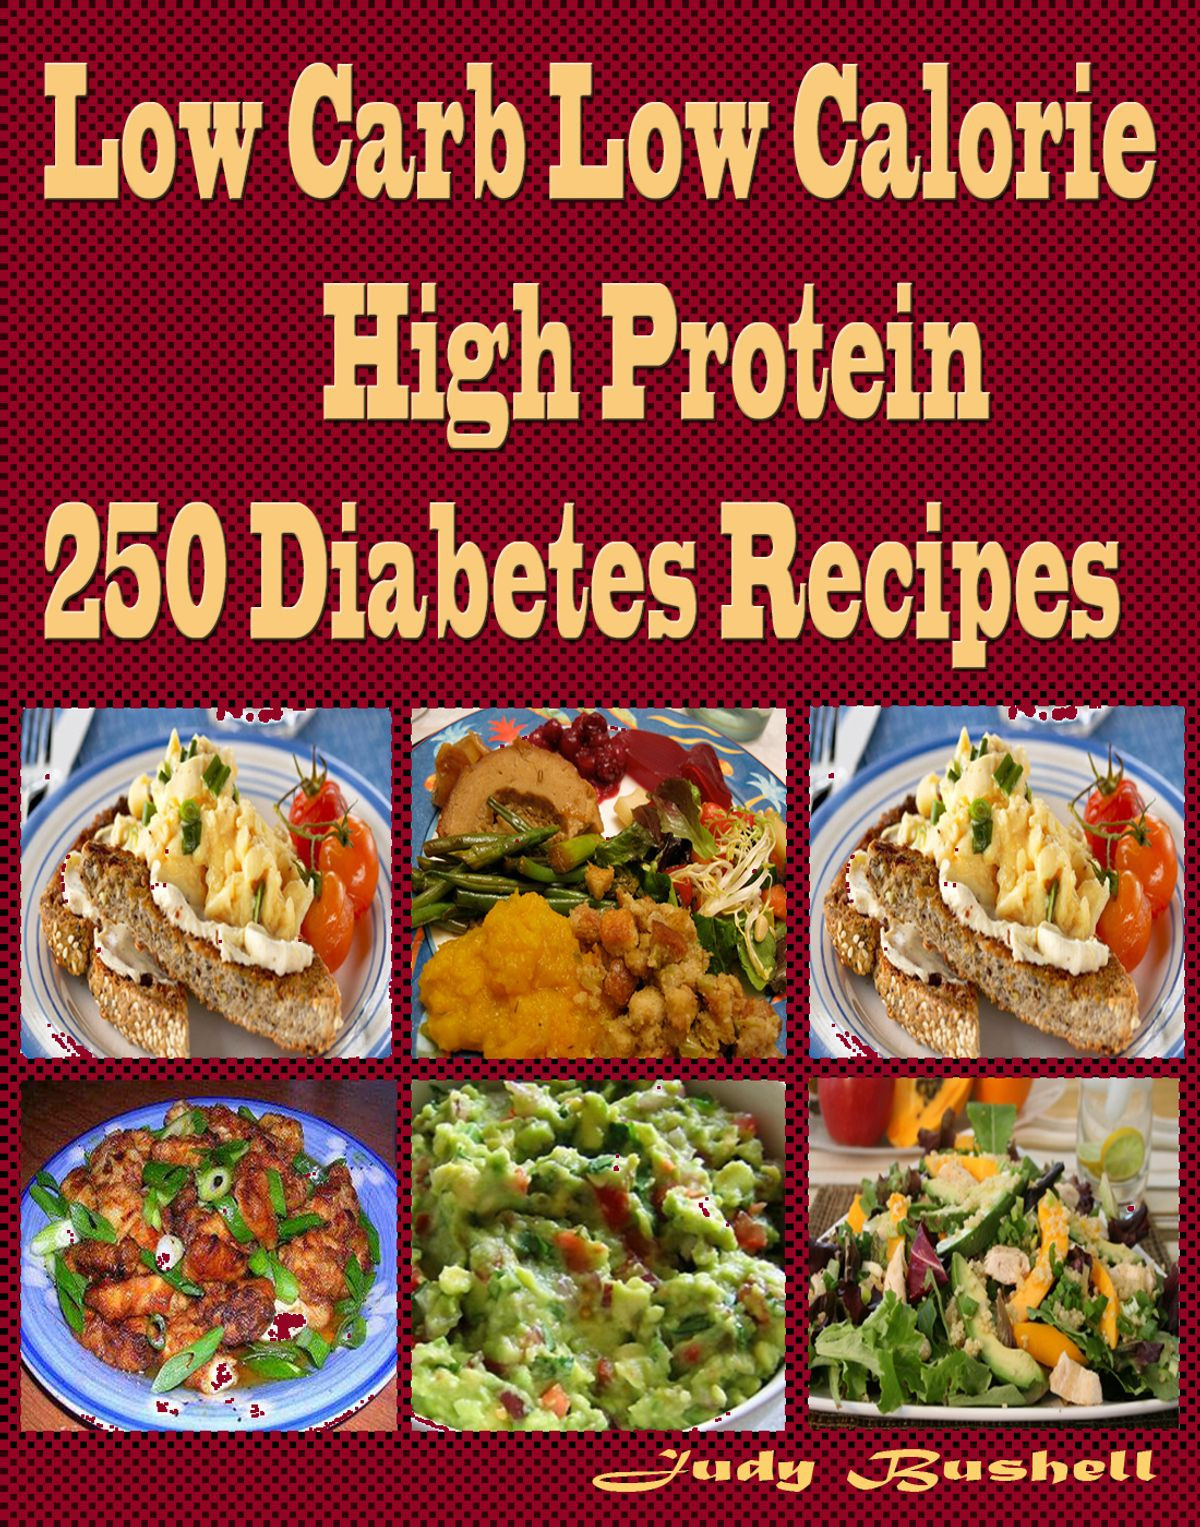 Low Calorie Low Carb Recipes Inspirational Low Carb Low Calorie High Protein 250 Diabetes Recipes